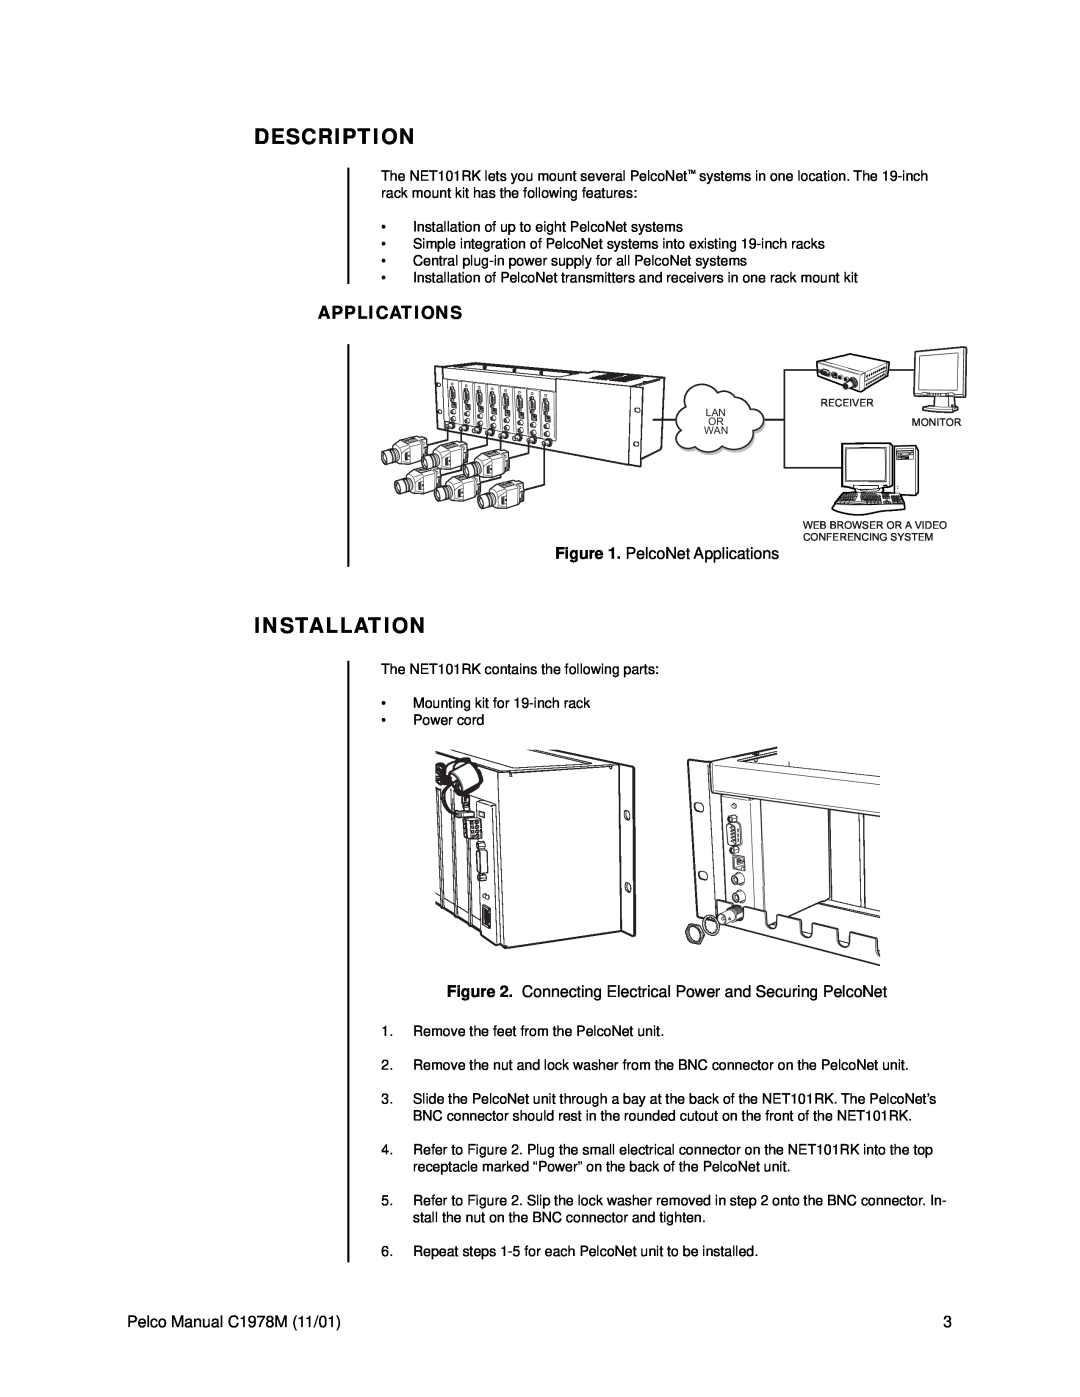 Pelco c1978m operation manual Description, Installation, PelcoNet Applications, Pelco Manual C1978M 11/01 